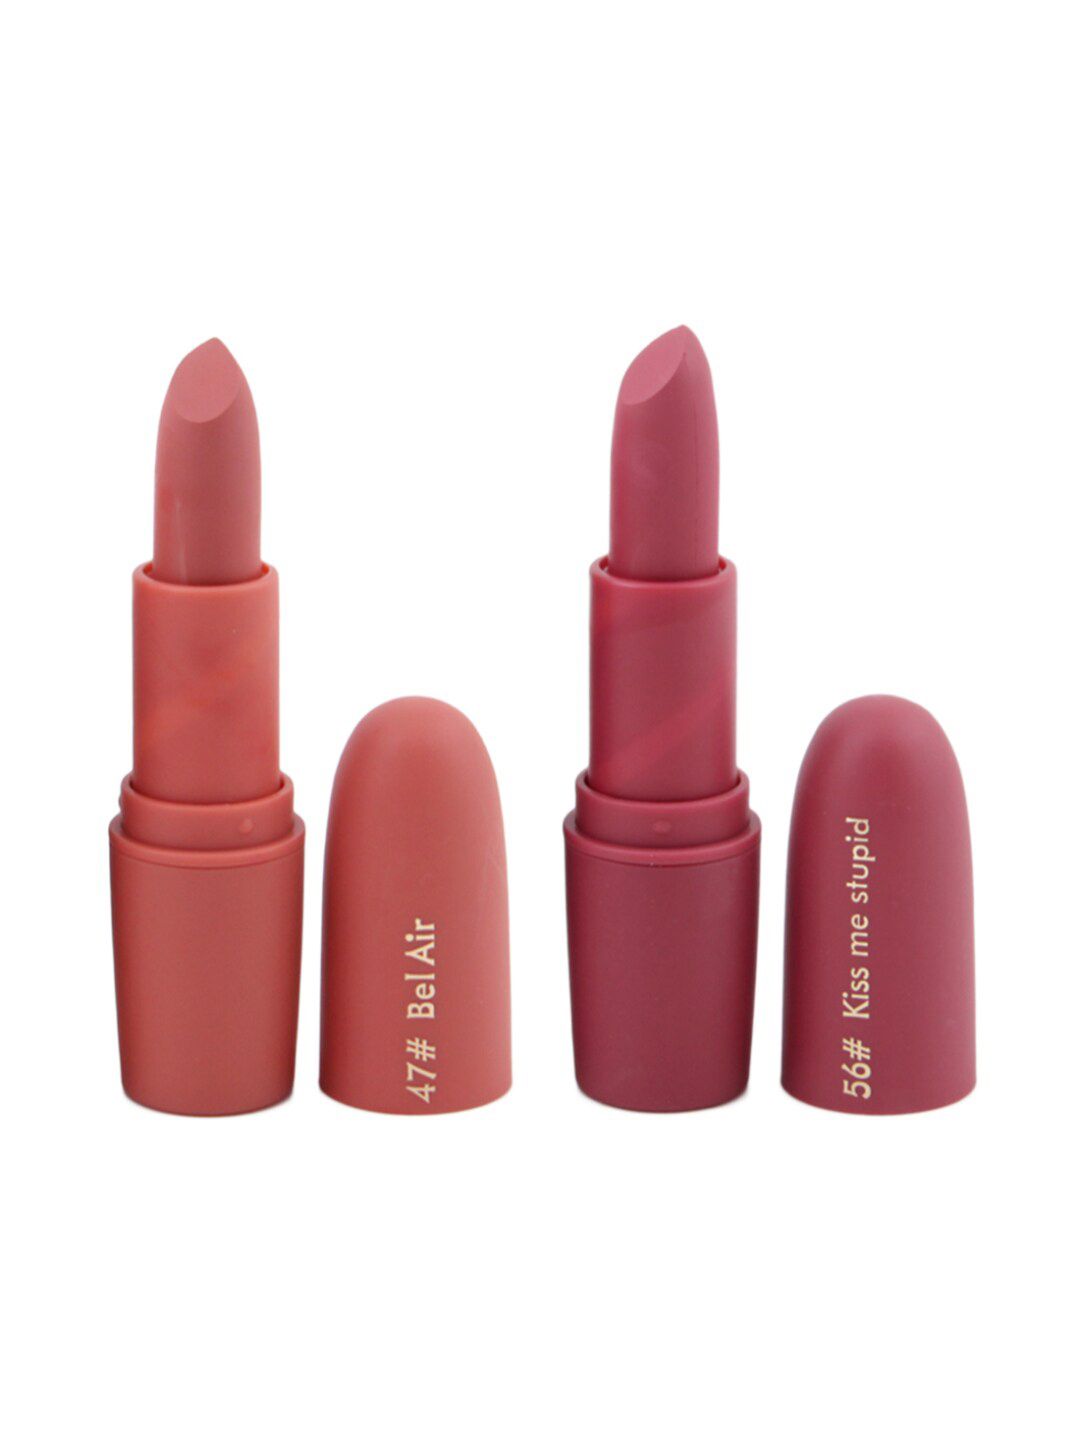 MISS ROSE Professional Make-Up Set of 2 Matte Lipsticks - Bel Air 47 & Kiss Me Stupid 56 Price in India